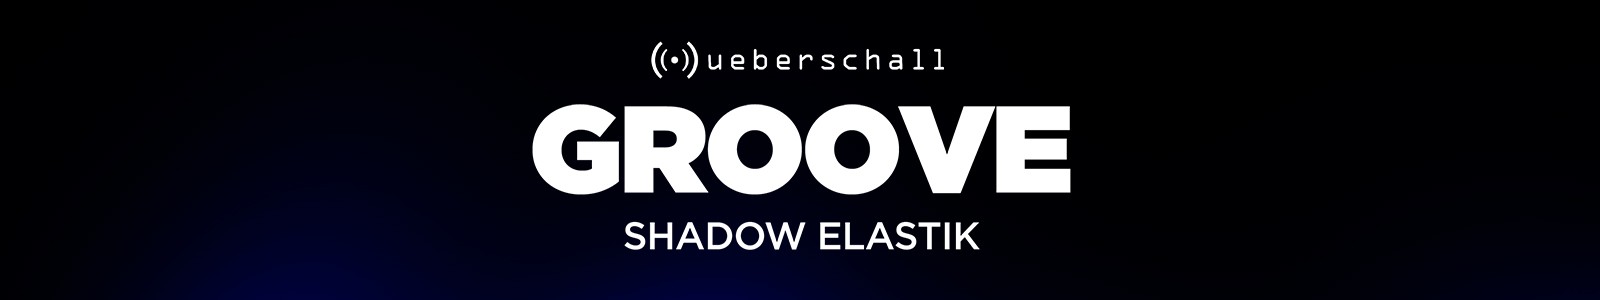 UEBERSCHALL Groove Shadow Elastik